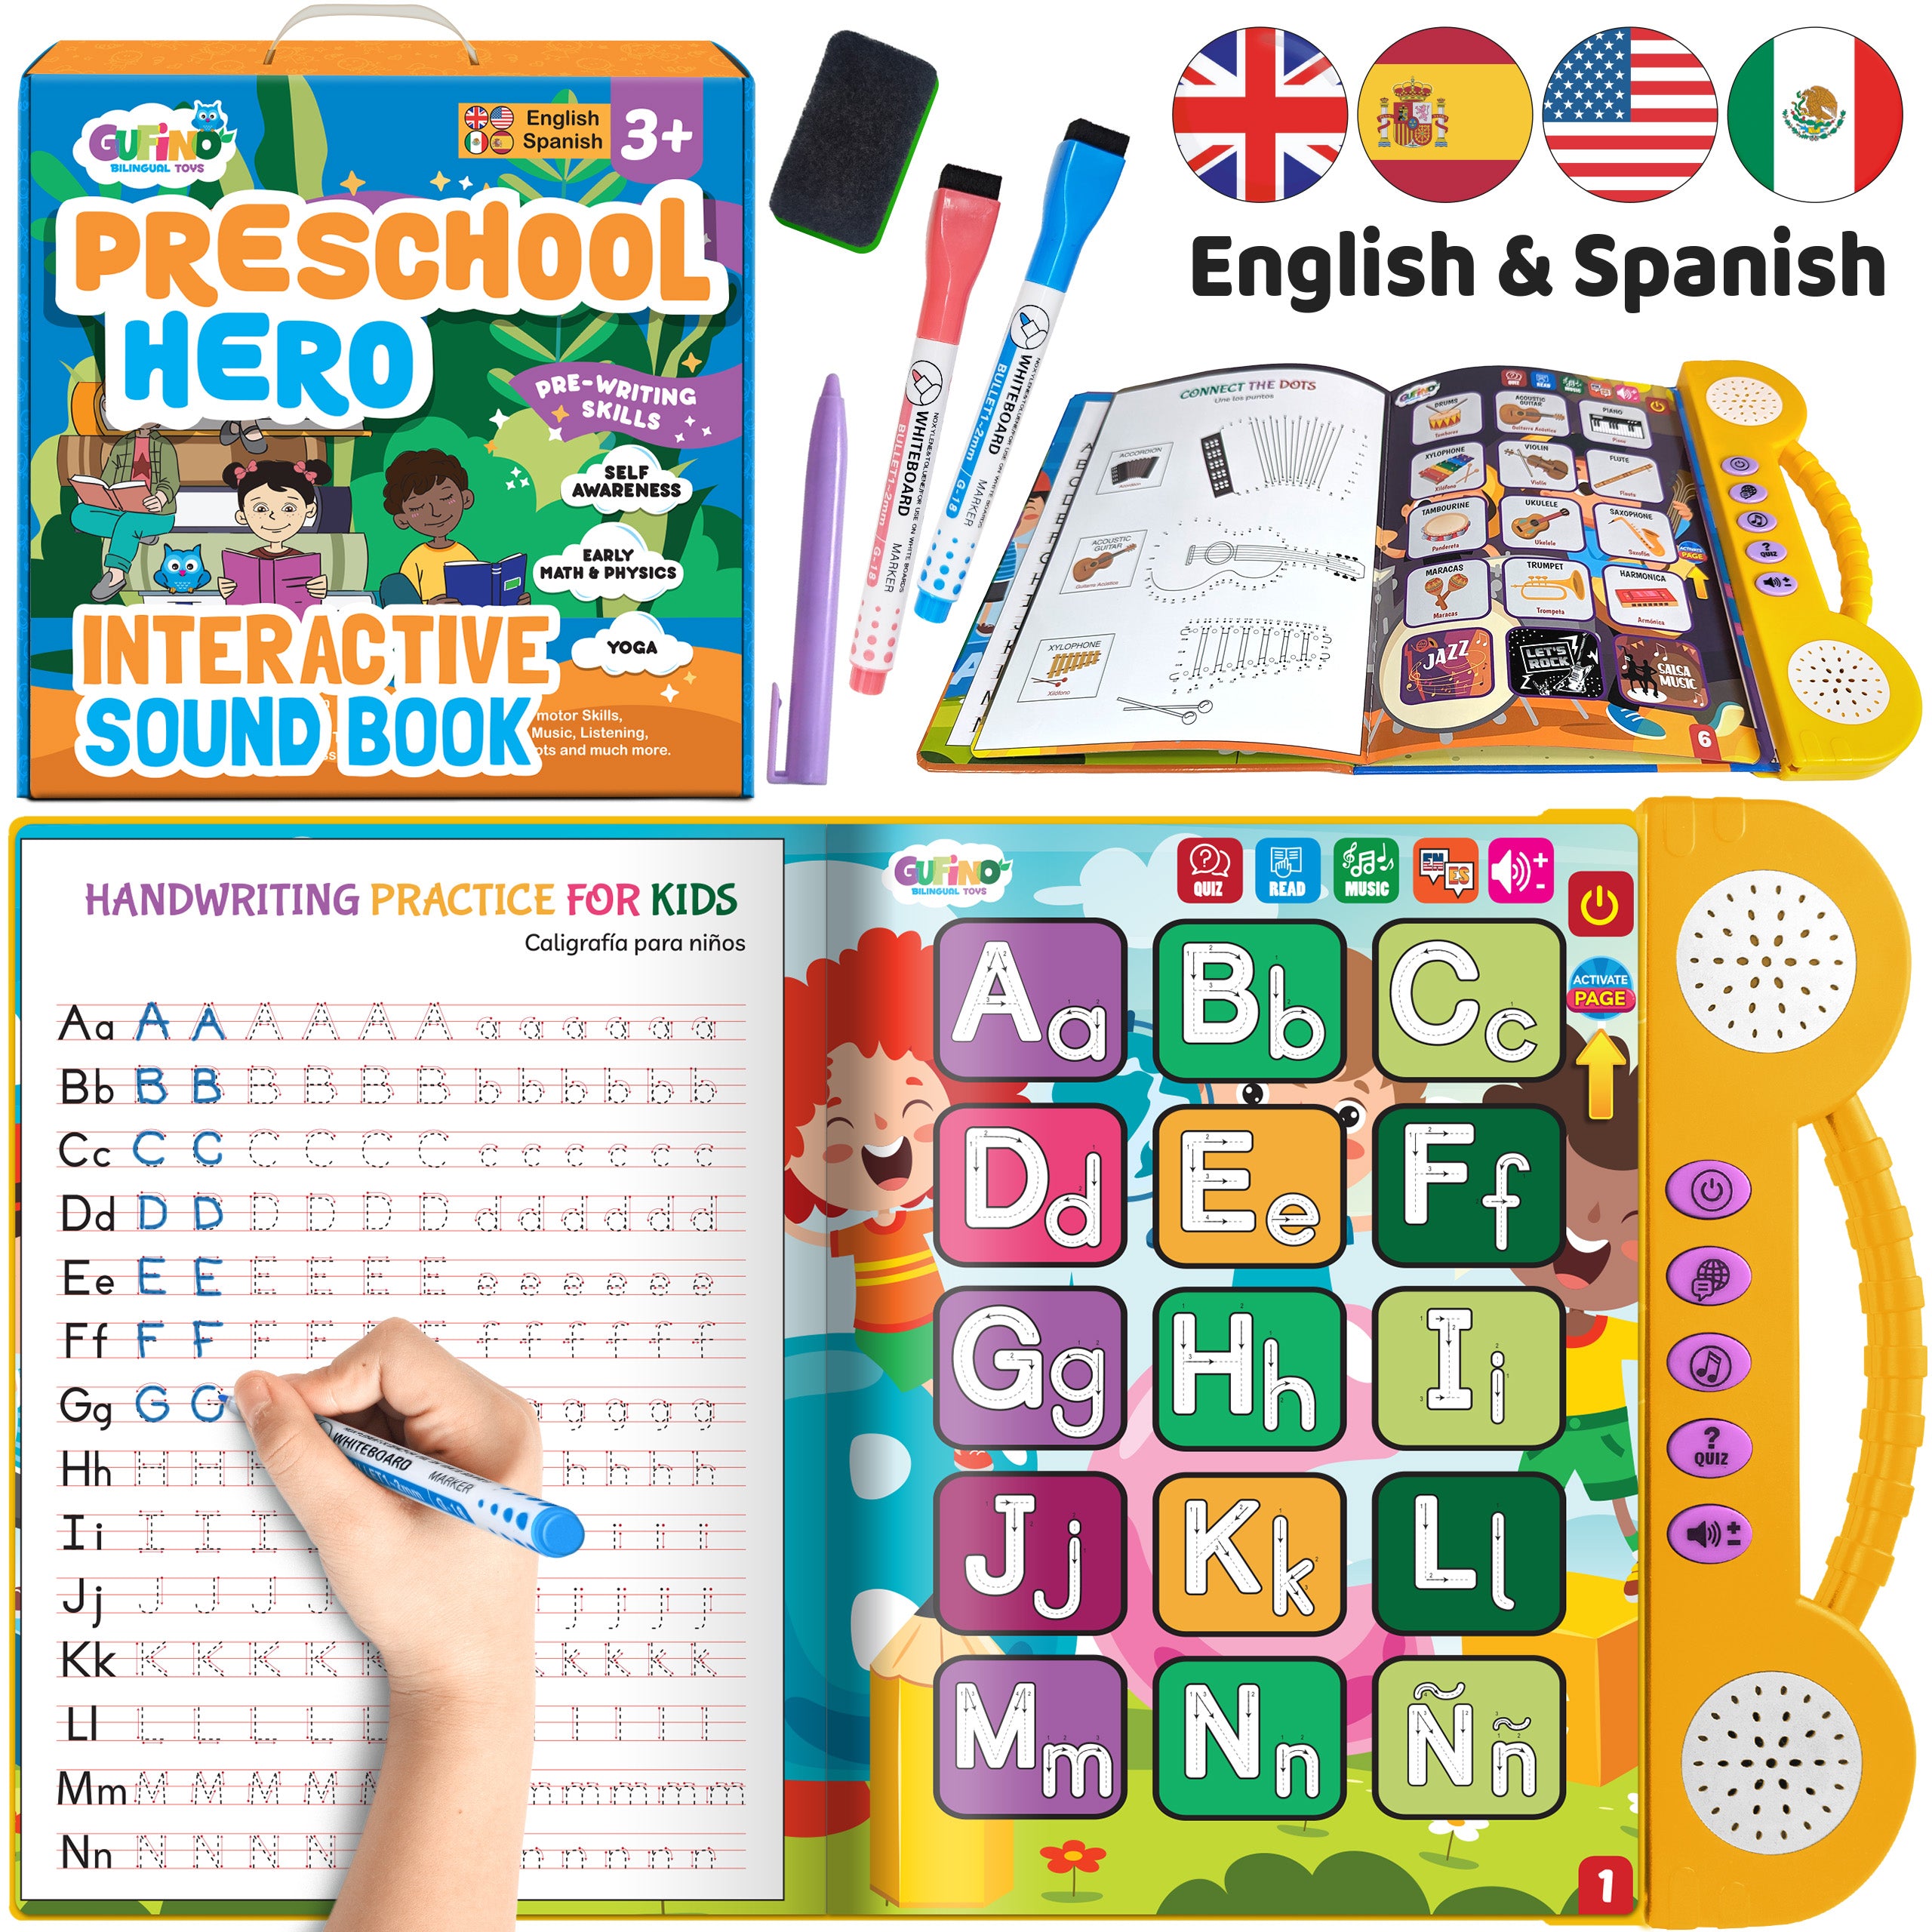 Preschool Workbook - Spanish and English - Audio in both languages - Gufino Bilingual Learning